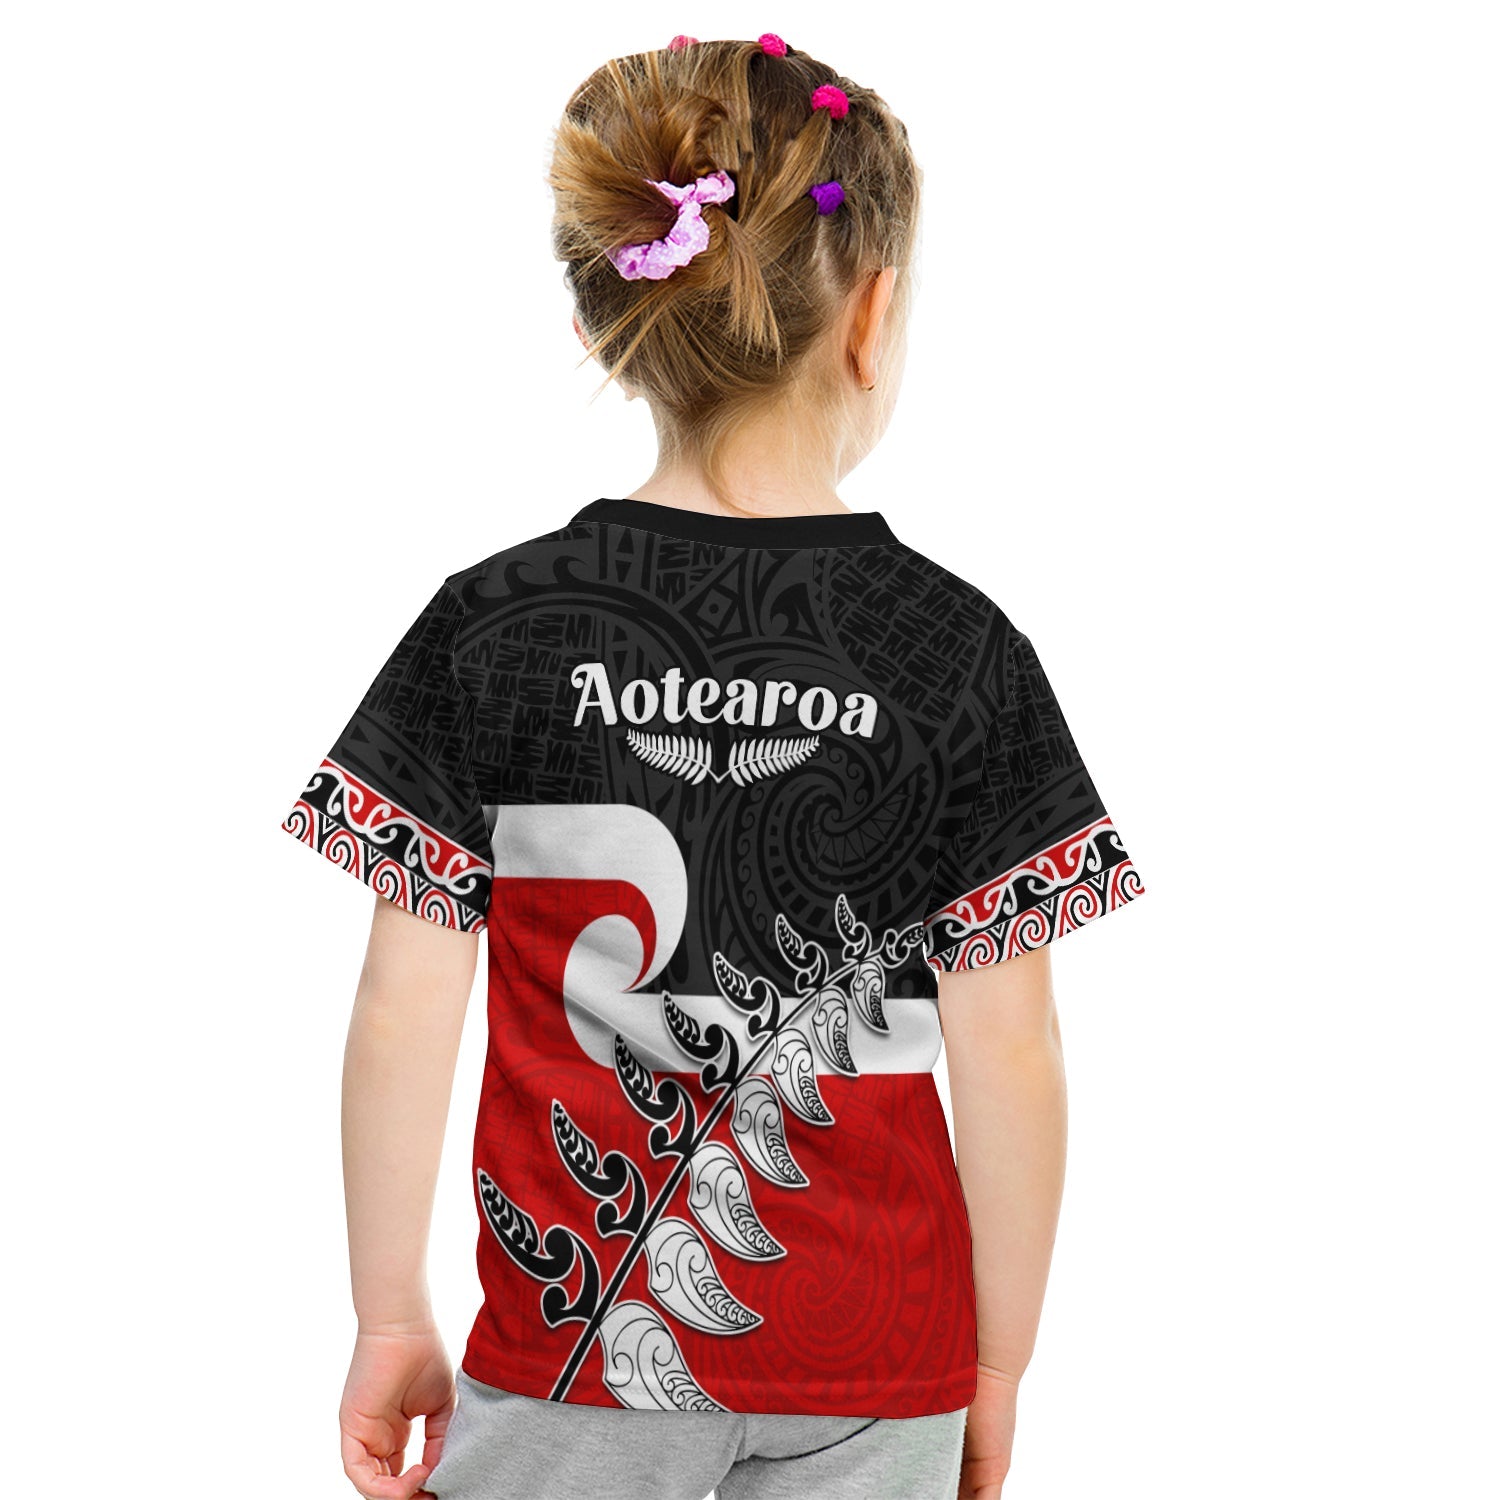 custom-personalised-waitangi-t-shirt-kid-aotearoa-maori-pattern-mix-fern-and-manaia-koru-lt13